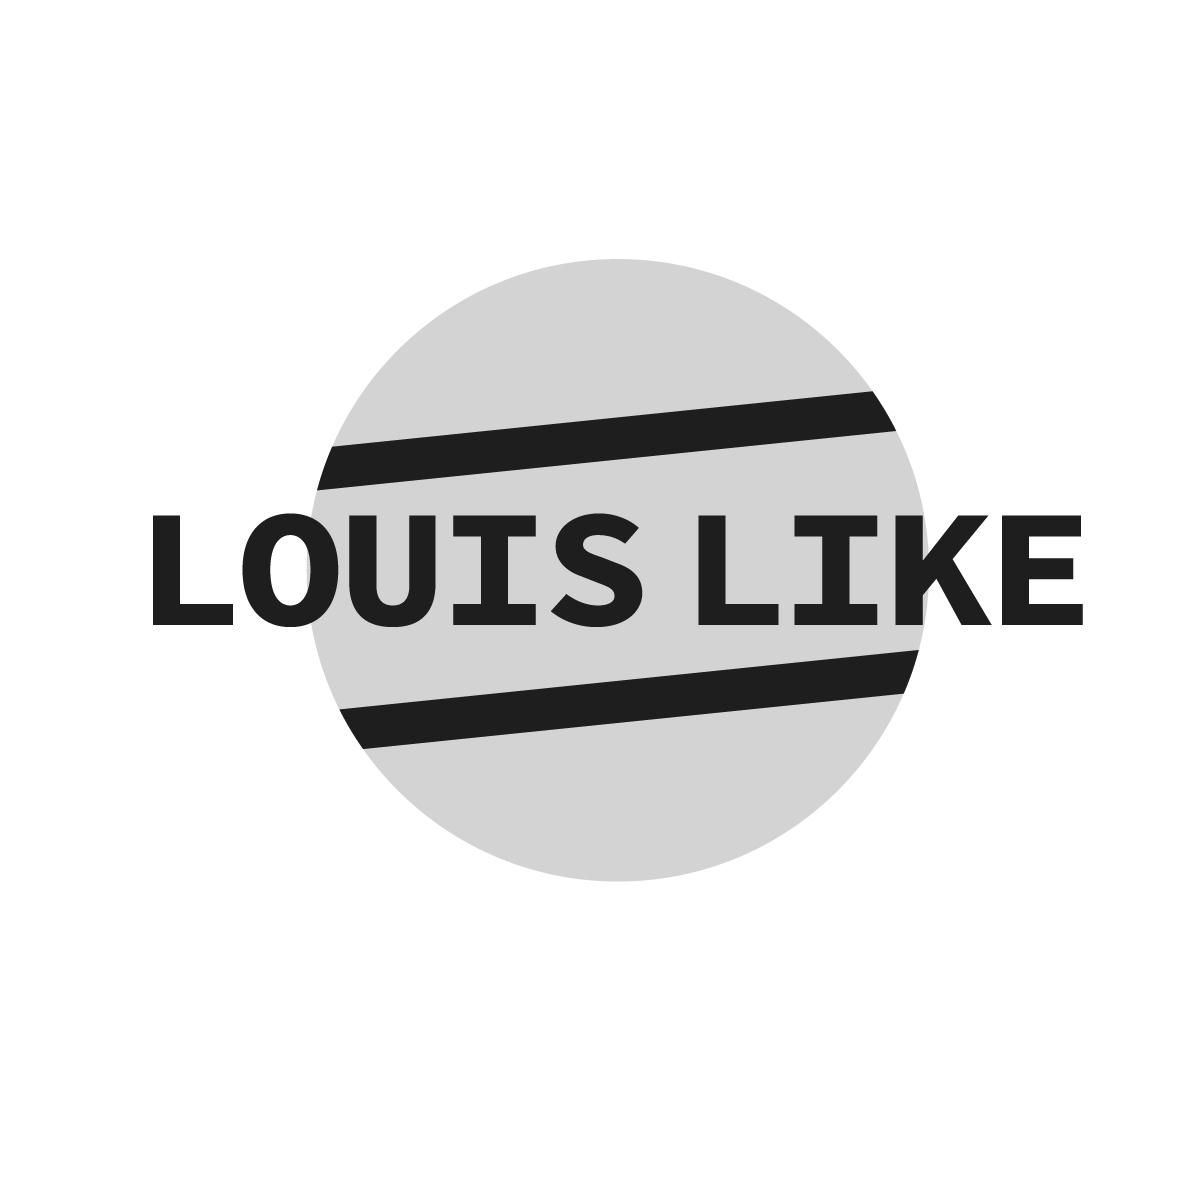 转让商标-LOUIS LIKE